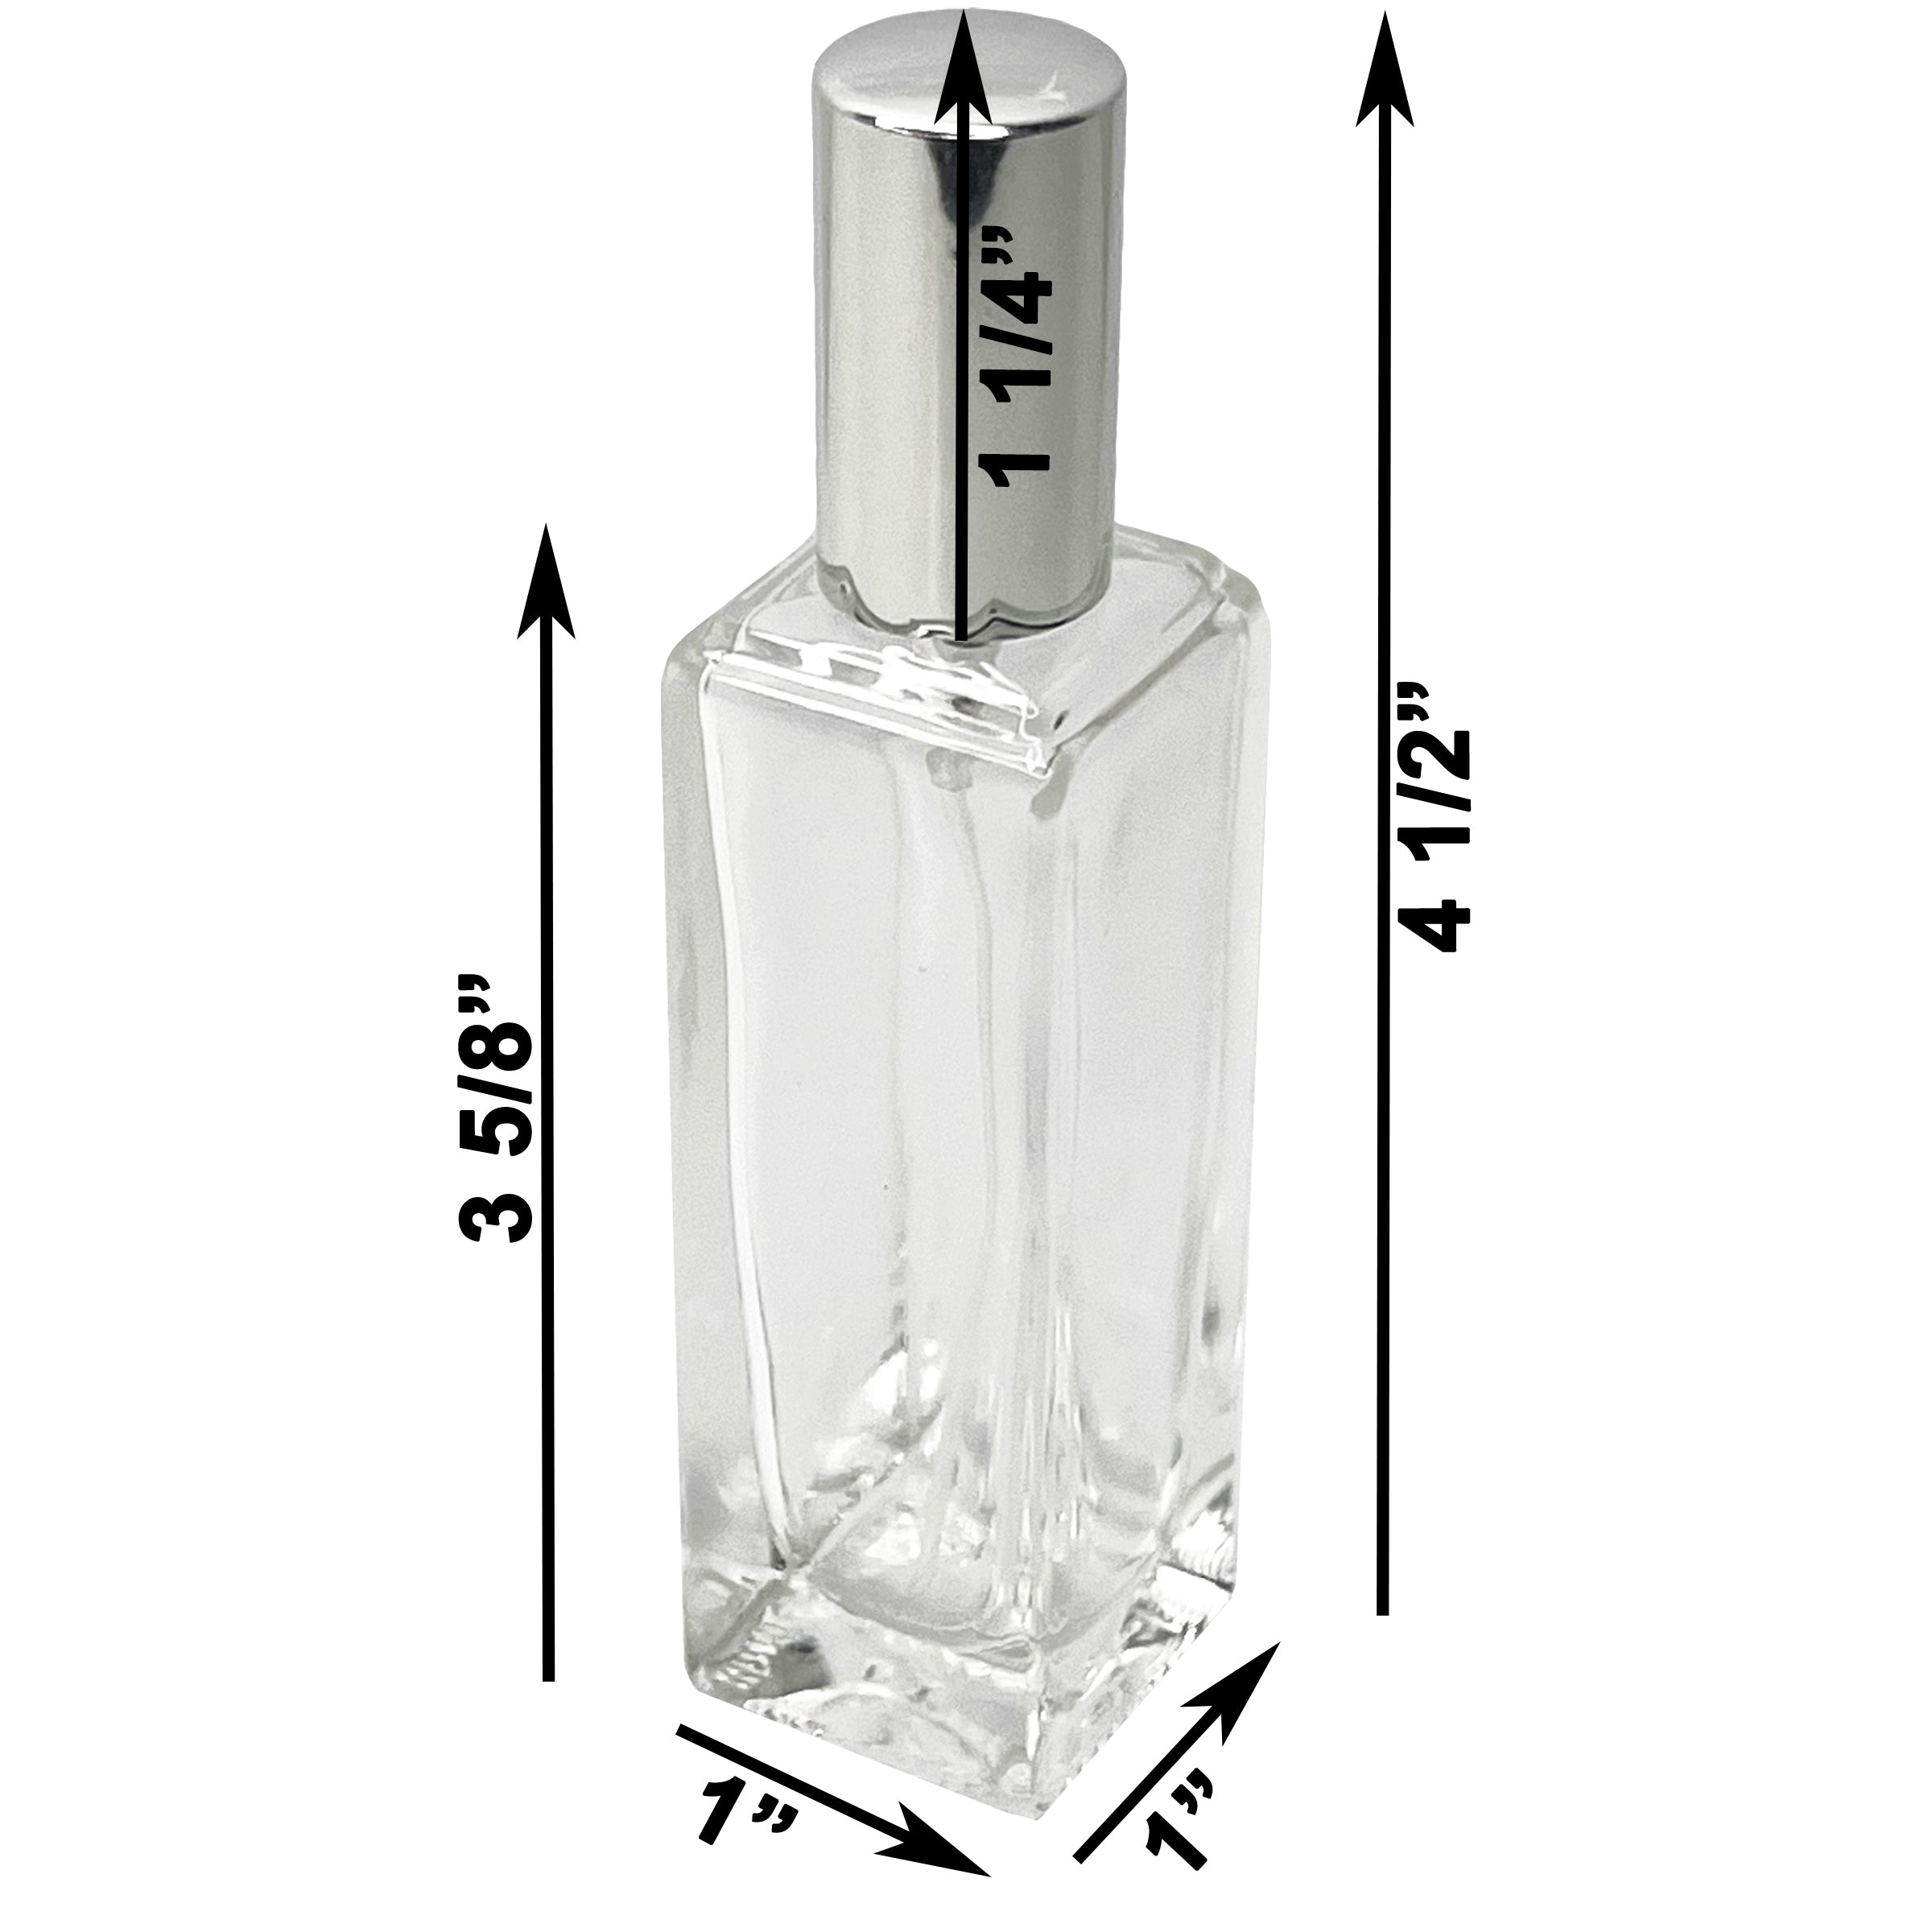 30ml 1oz Perfume Thick Glass Tall Spray Bottles Silver Atomizers